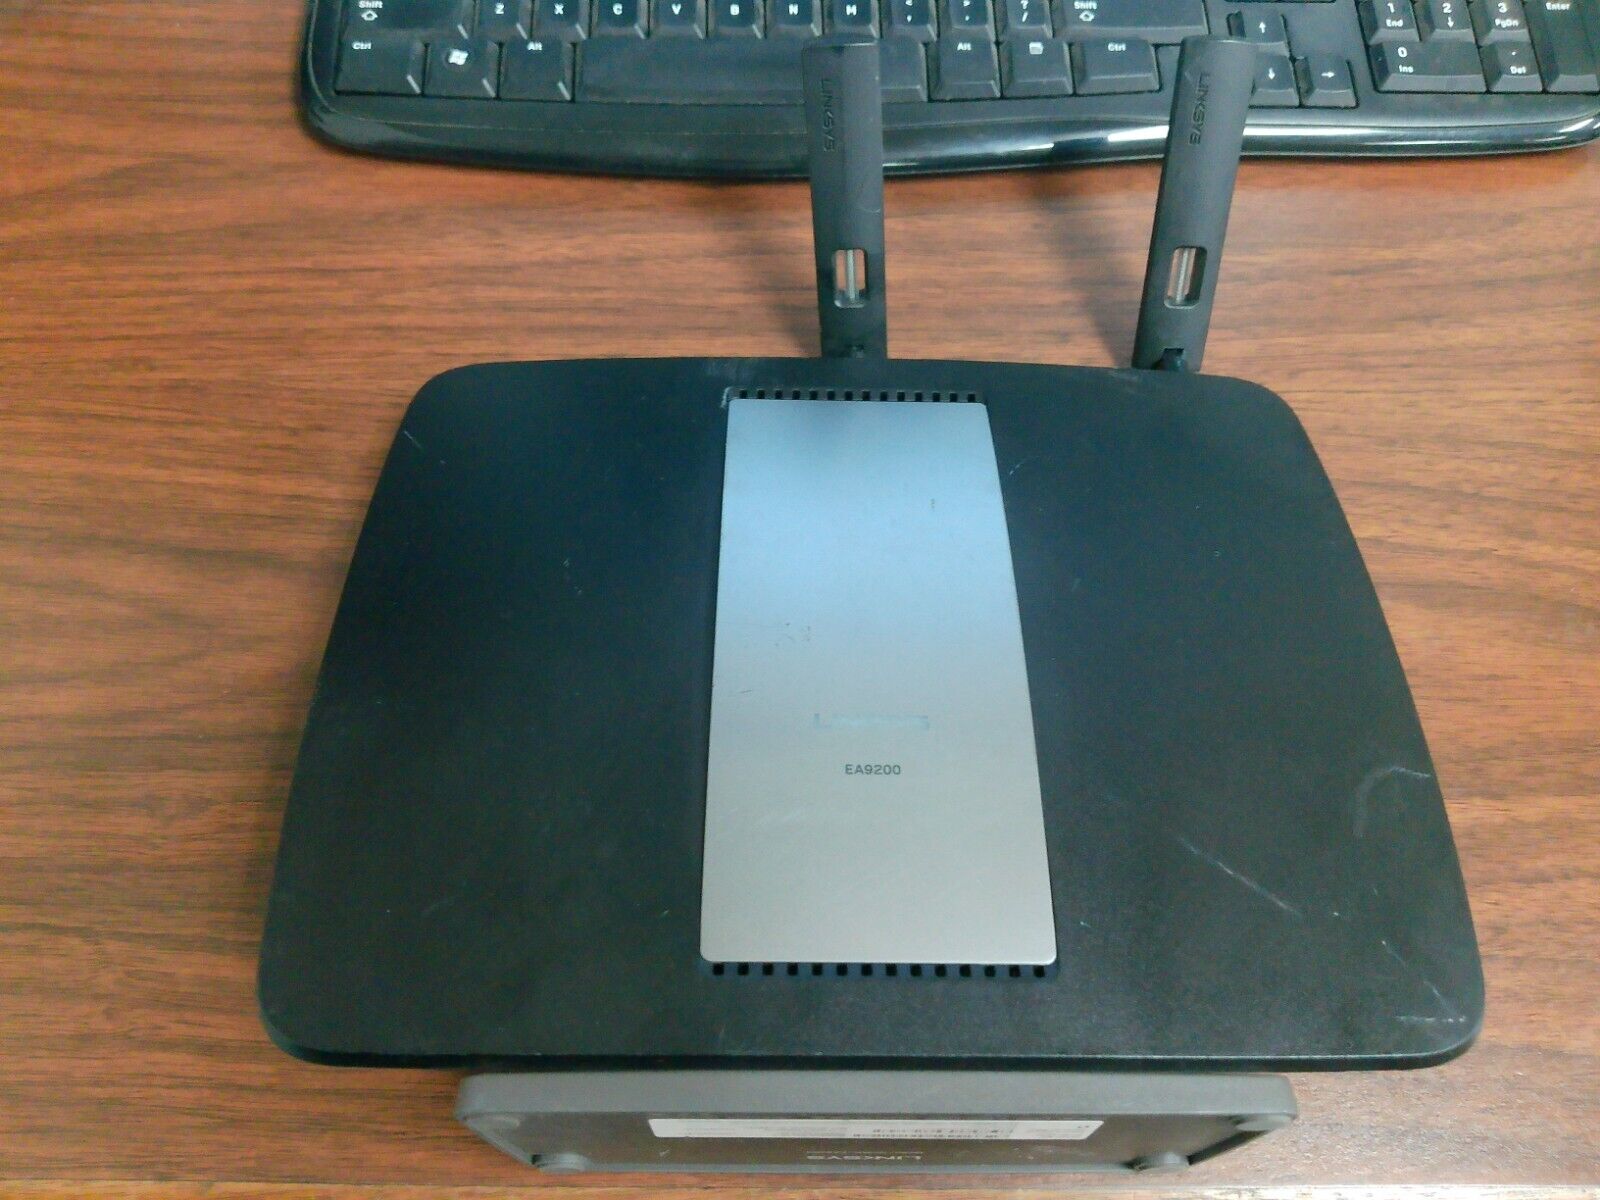 Linksys EA9200 AC3200 Tri-Band Gigabit Smart Wi-Fi Wireless Router